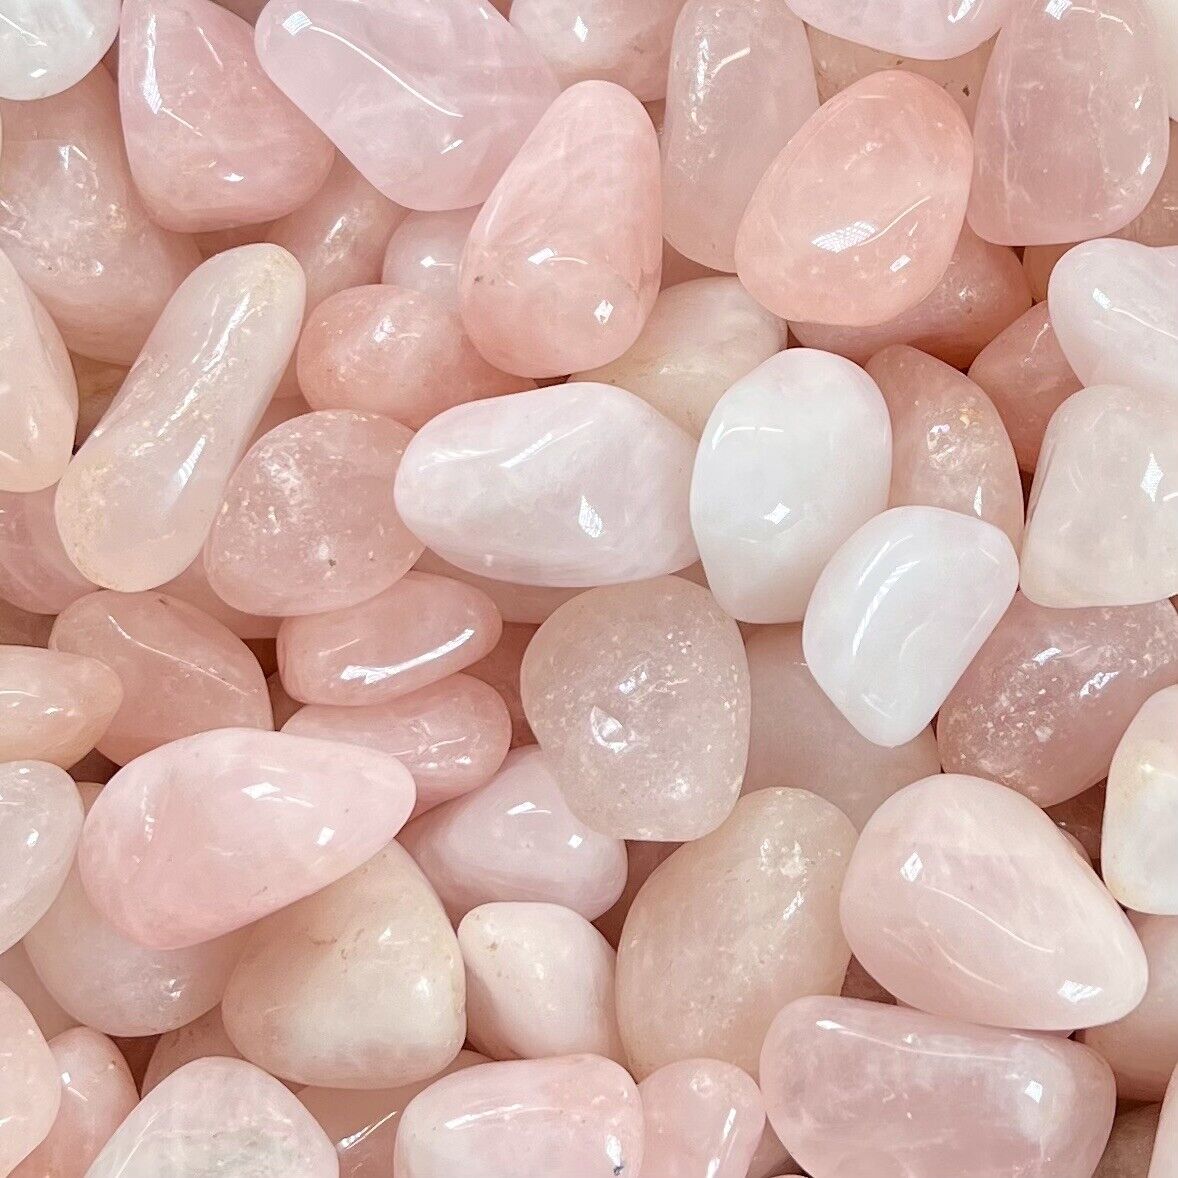 1lb JUMBO Bulk Rose Quartz Lot - Tumbled Stones - Healing And Reiki Crystals